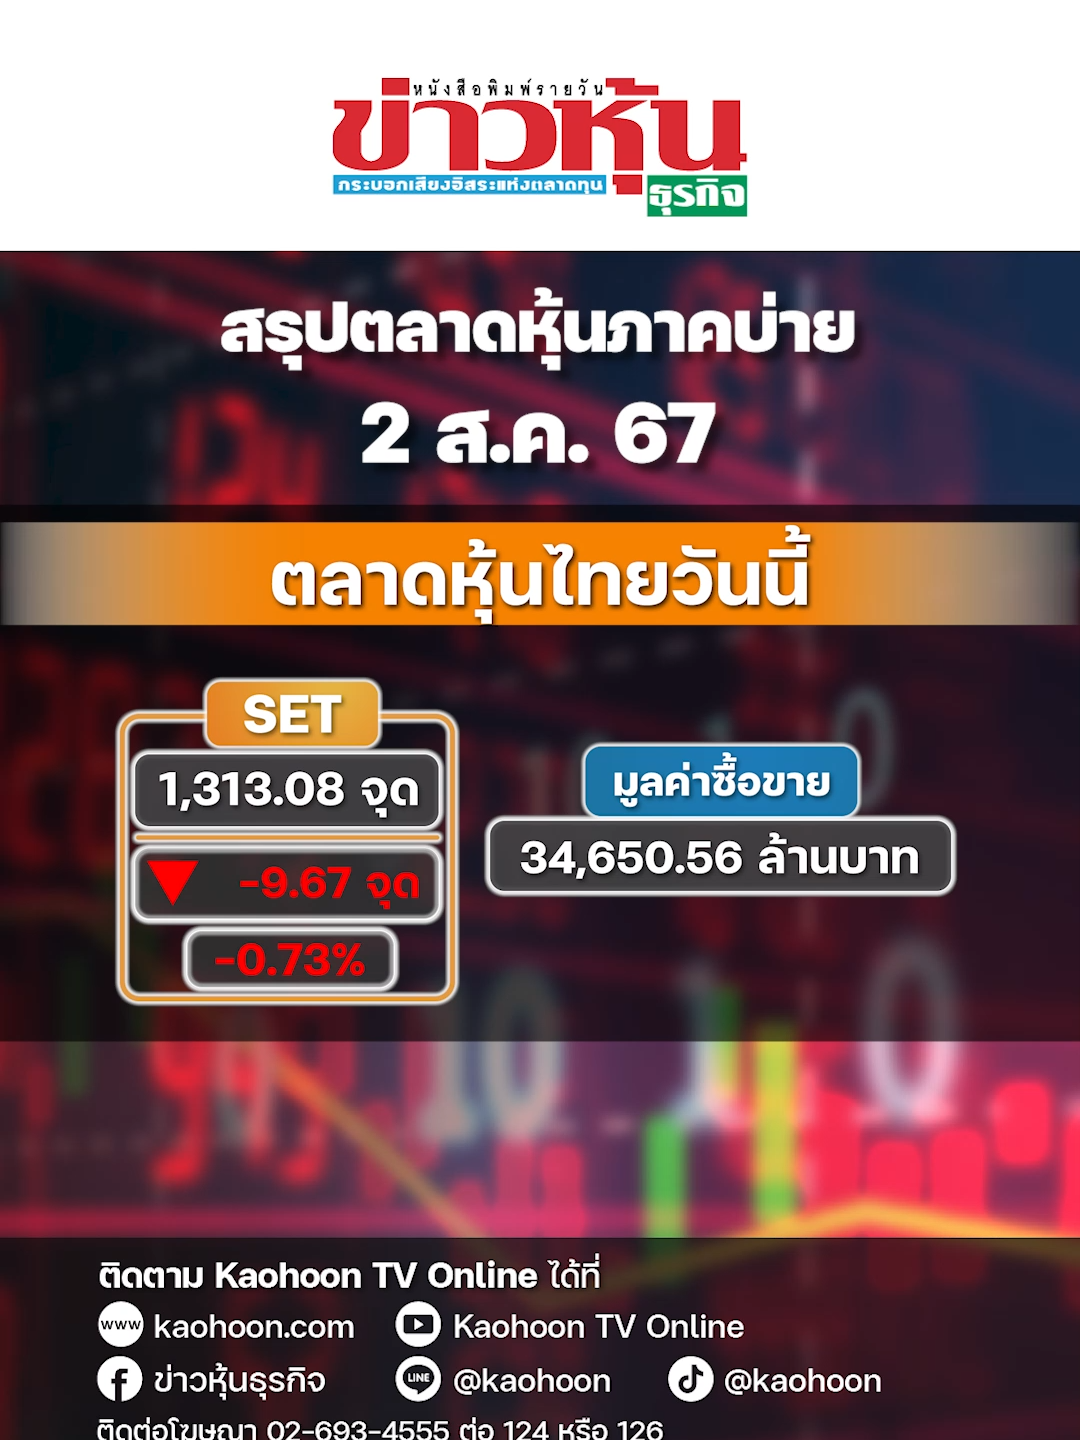 SET ปิดตลาดลดลง 9.67 จุด สัปดาห์หน้าคาดดัชนีแกว่งในกรอบ แนะเก็บหุ้น CK และ IVL #หุ้นเด่น #หุ้นไทย #ข่าวหุ้น #ข่าวหุ้นธุรกิจ #ข่าวtiktok #kaohoon #kaohoononline